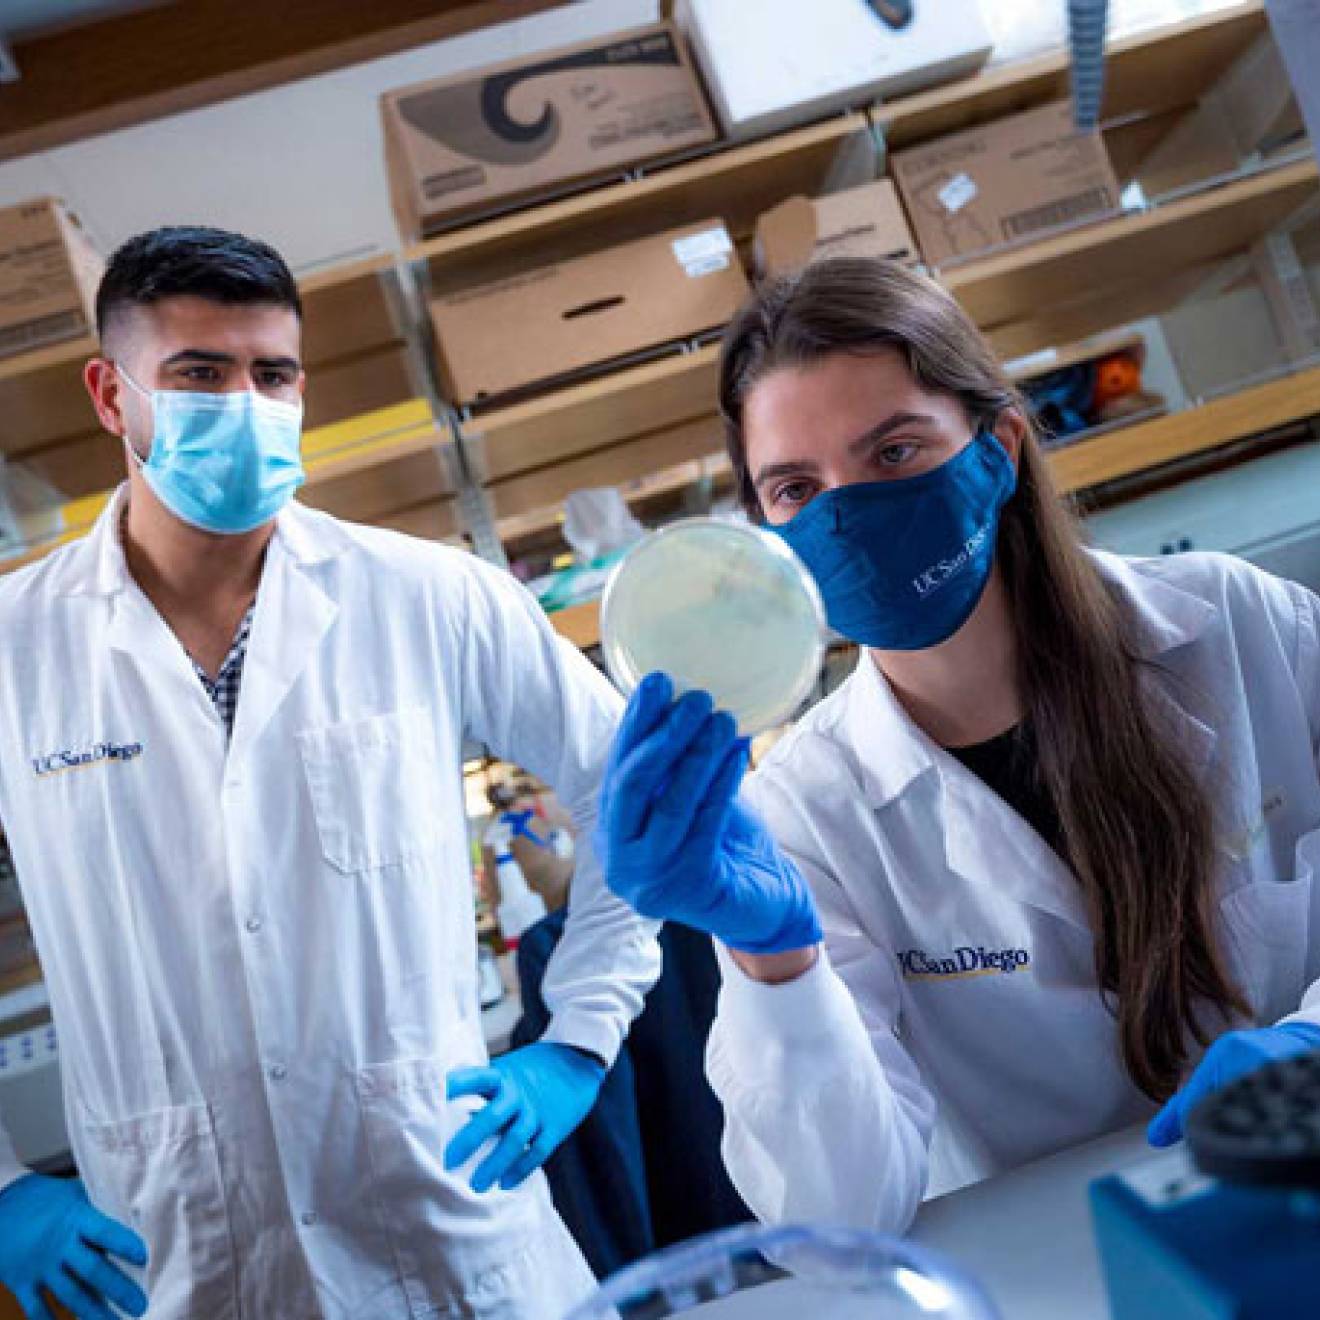 Rivera-Chávez working in the lab alongside Cinthia Garcia